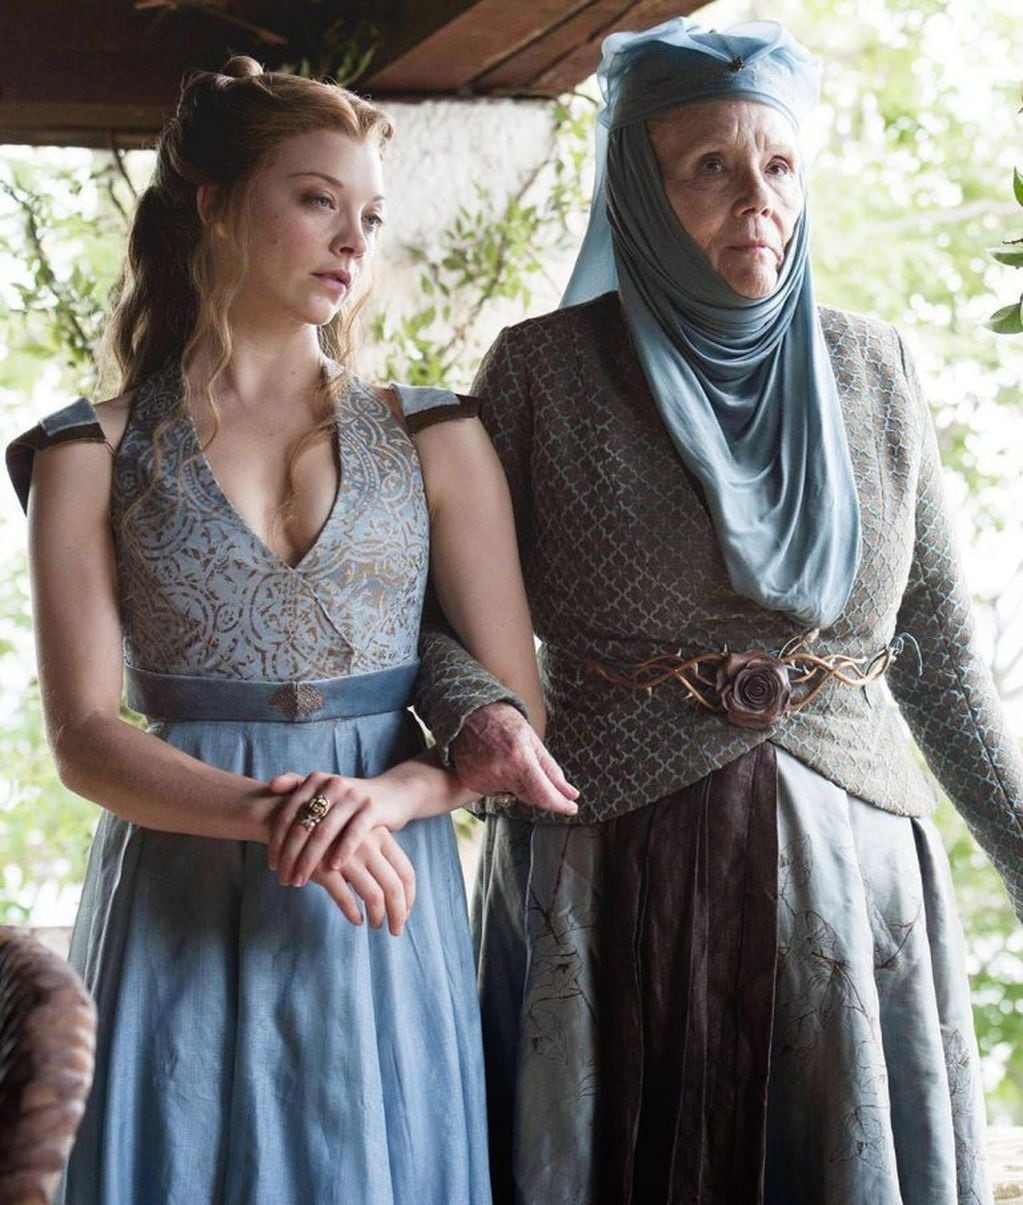 Natalie Dormer interpretó a Margaery Tyrell, nieta de Olenna en la serie Game of Thrones (Instagram/@nataliedormer)